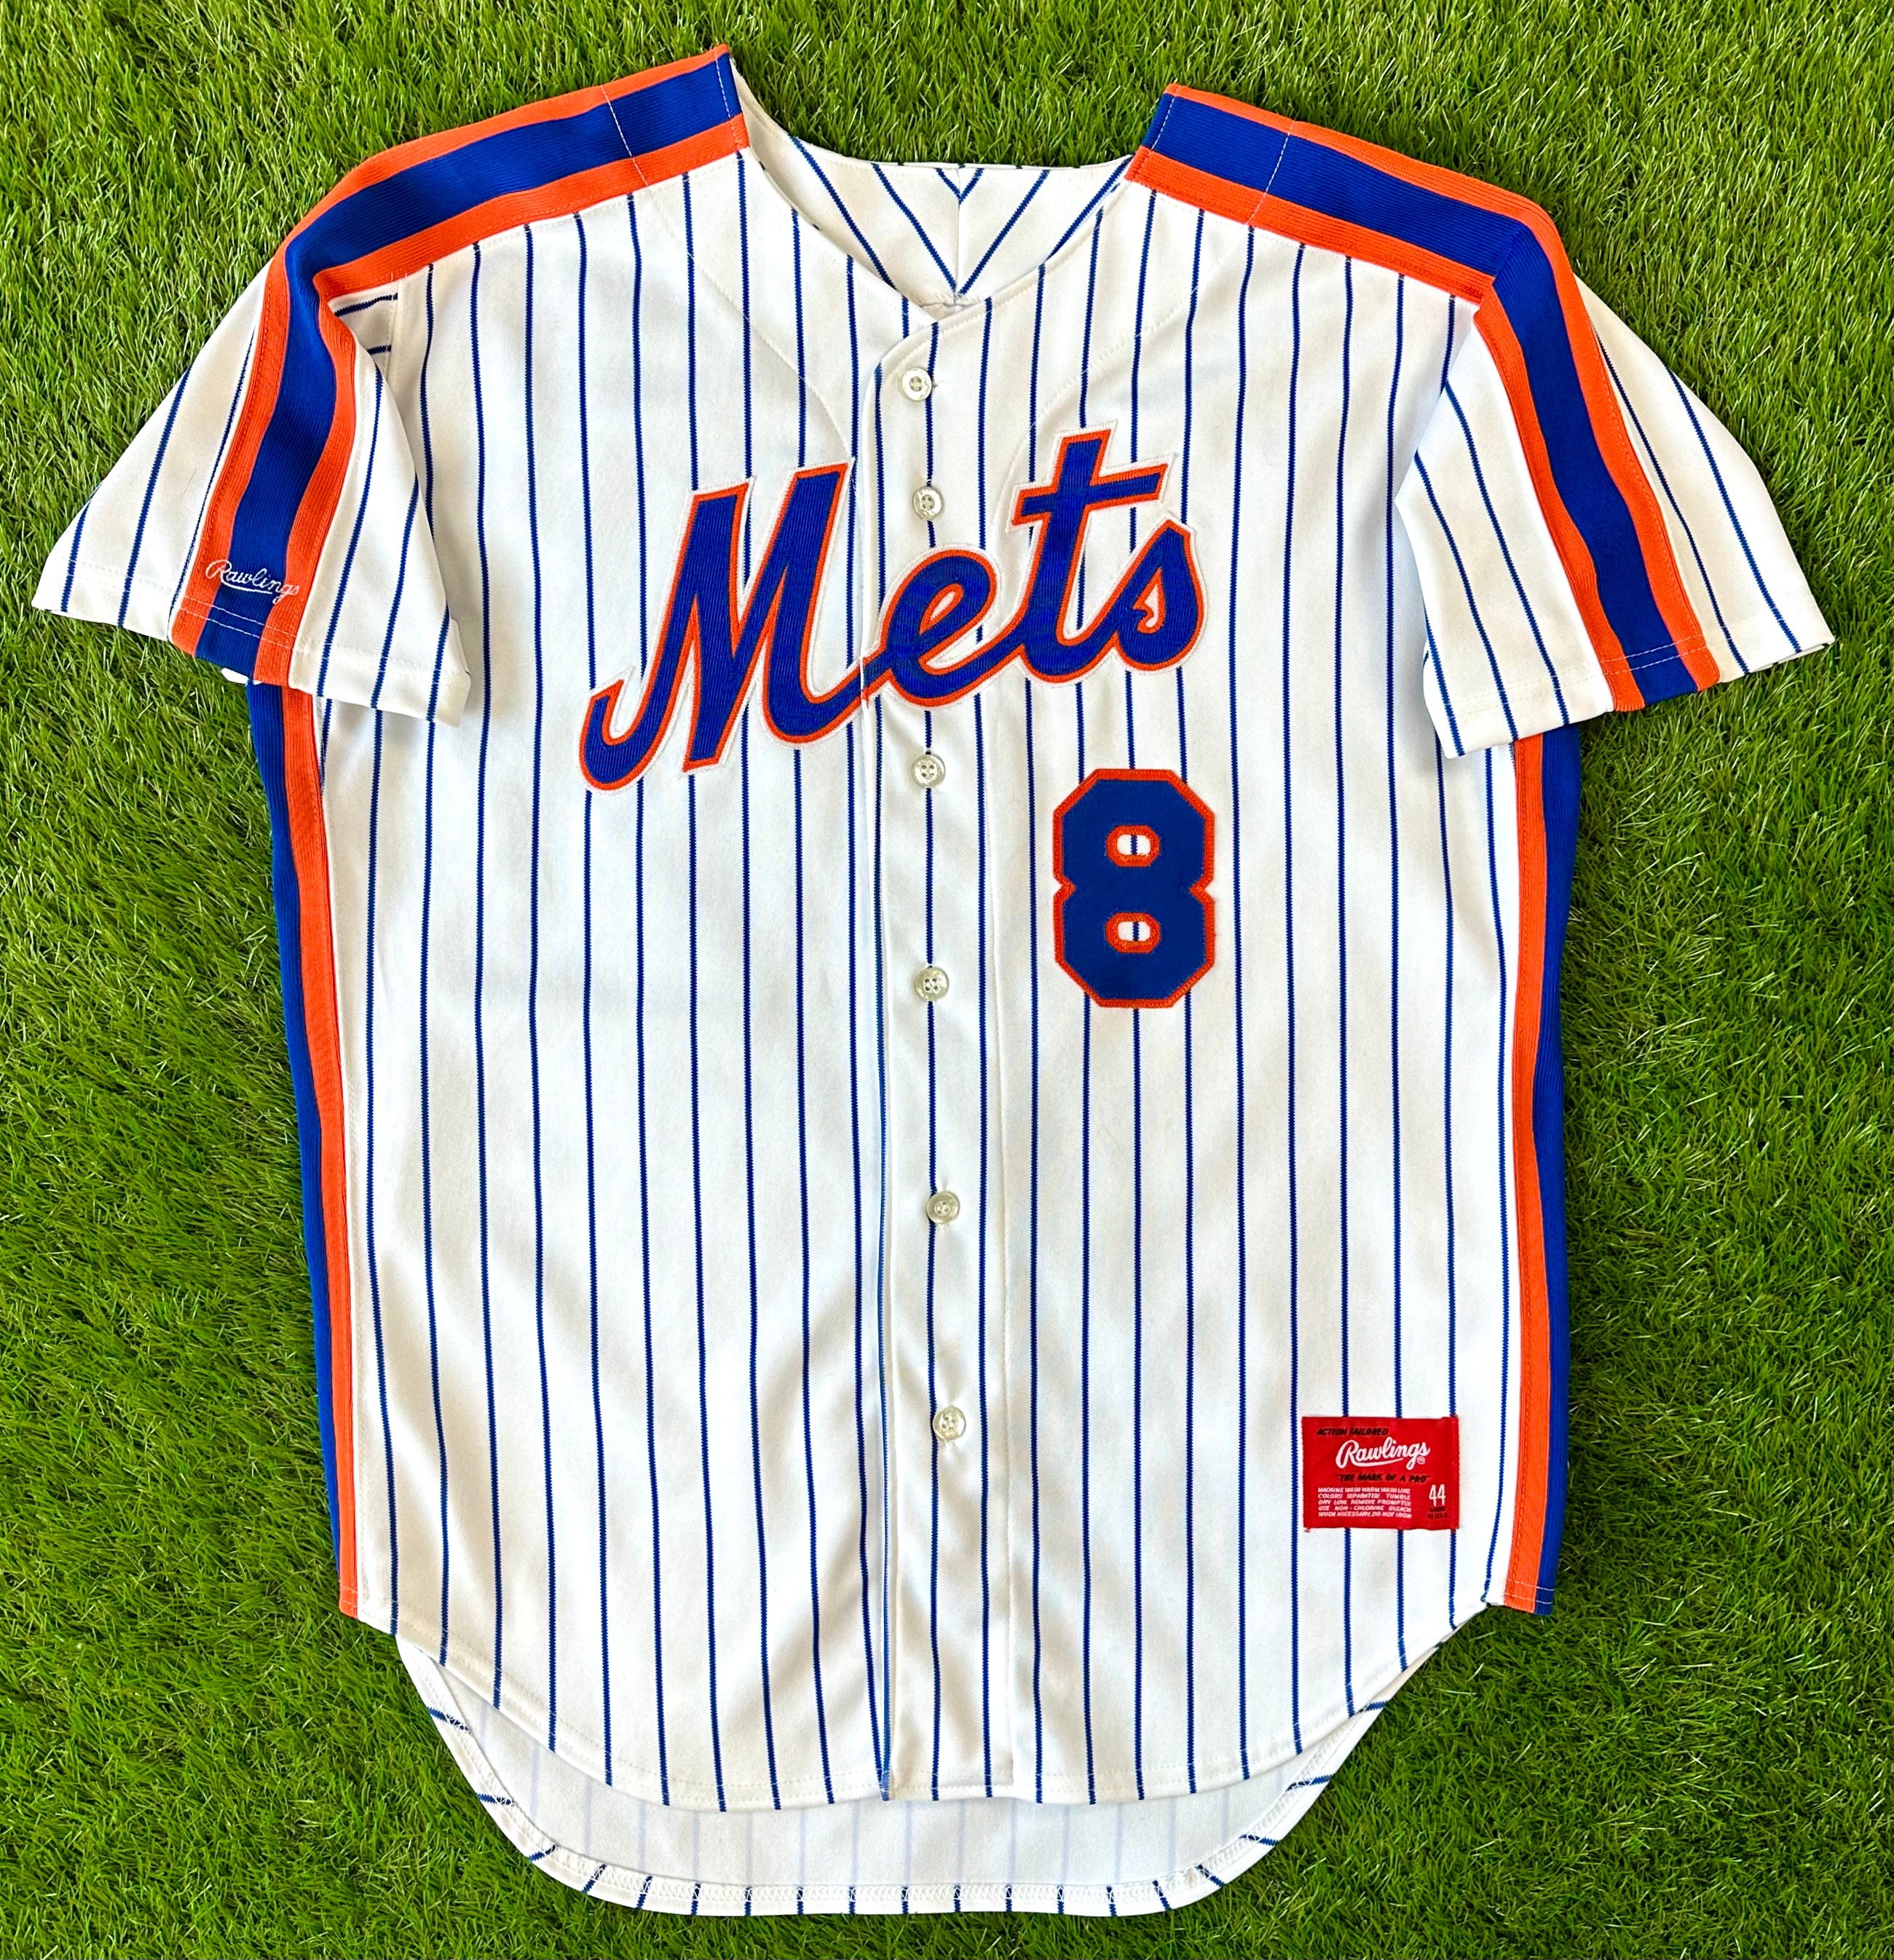 New York Yankees 1982-1991 Road Don Mattingly MLB Baseball Jersey (44/Large)